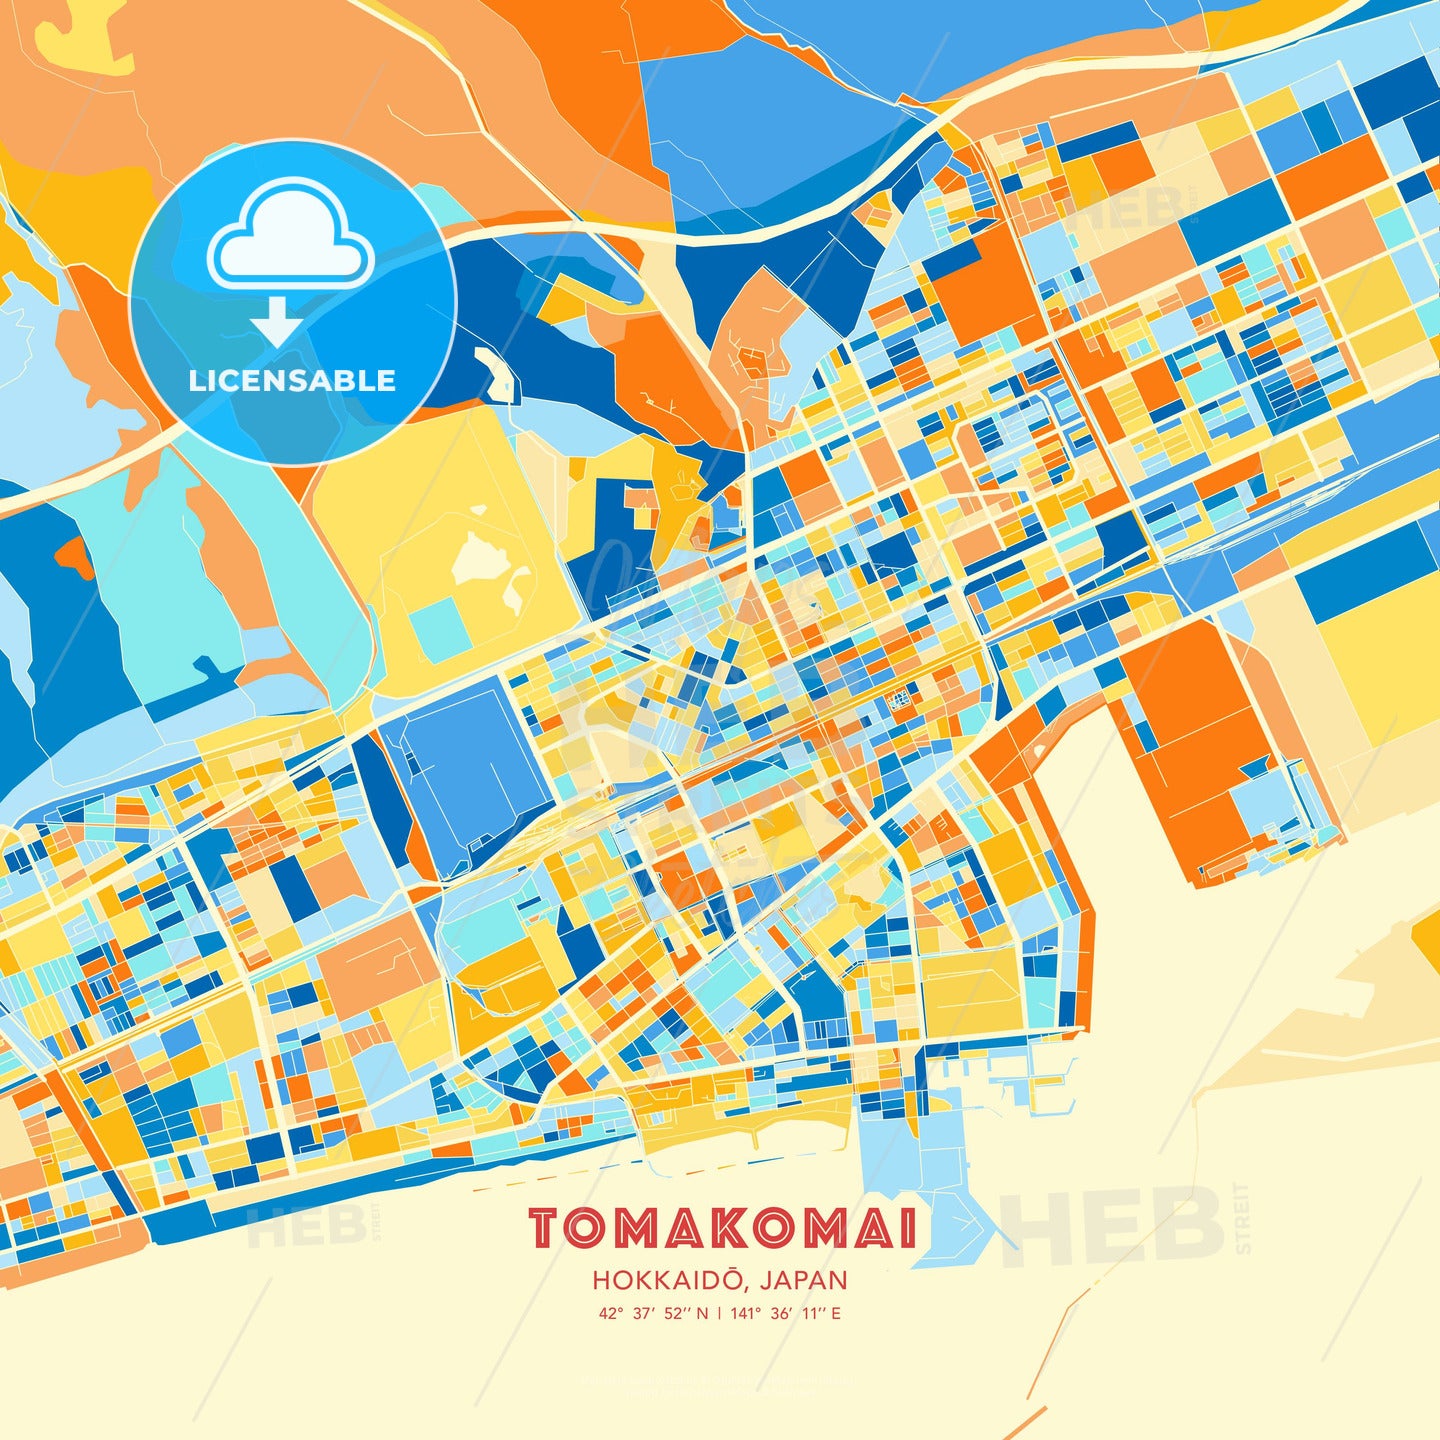 Tomakomai, Hokkaidō, Japan, map - HEBSTREITS Sketches